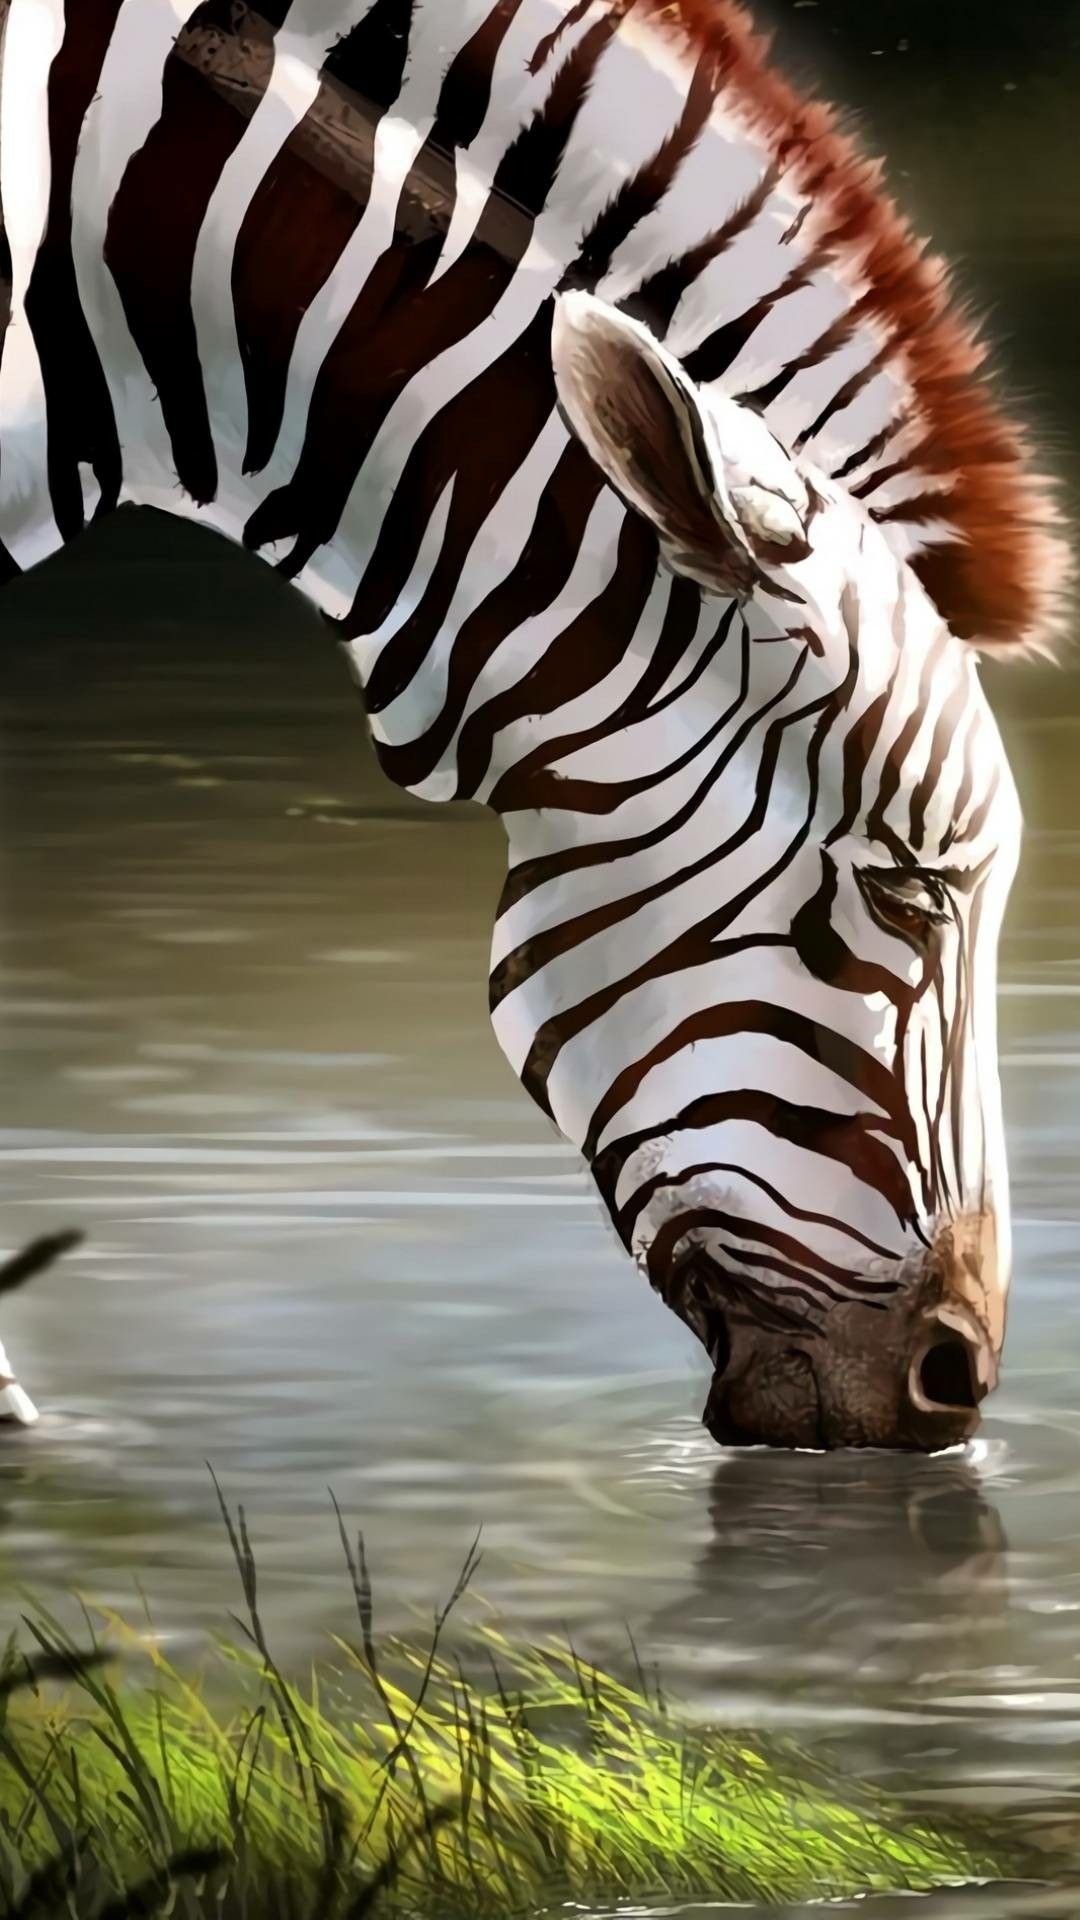 Awesome zebra wallpaper, Wild African animals, Captivating zebra imagery, Stunning animal photography, 1080x1920 Full HD Phone